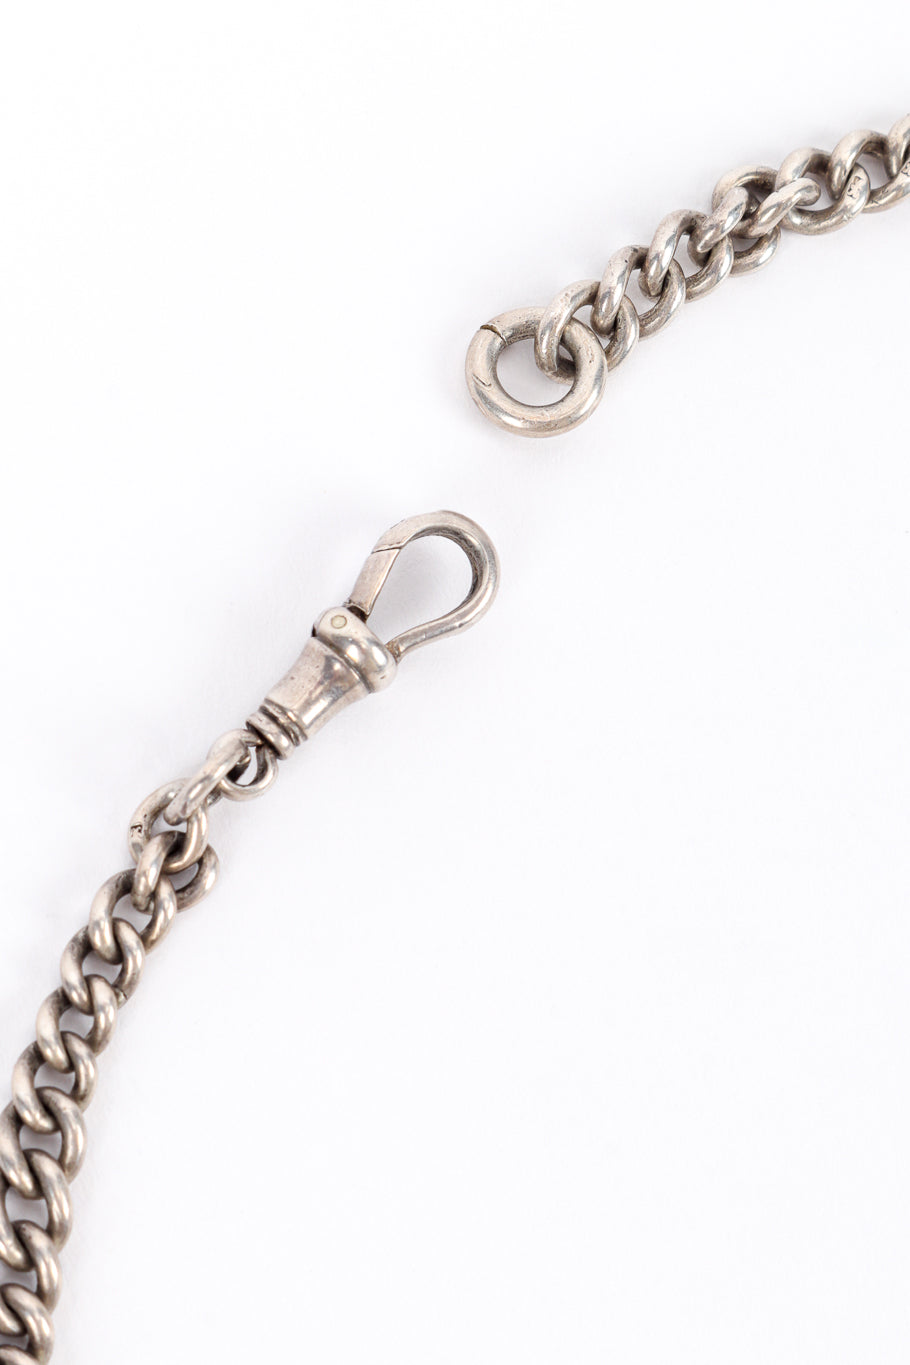 Vintage Sterling Albert Chain Crest Necklace dog clasp unhooked closeup @recess la